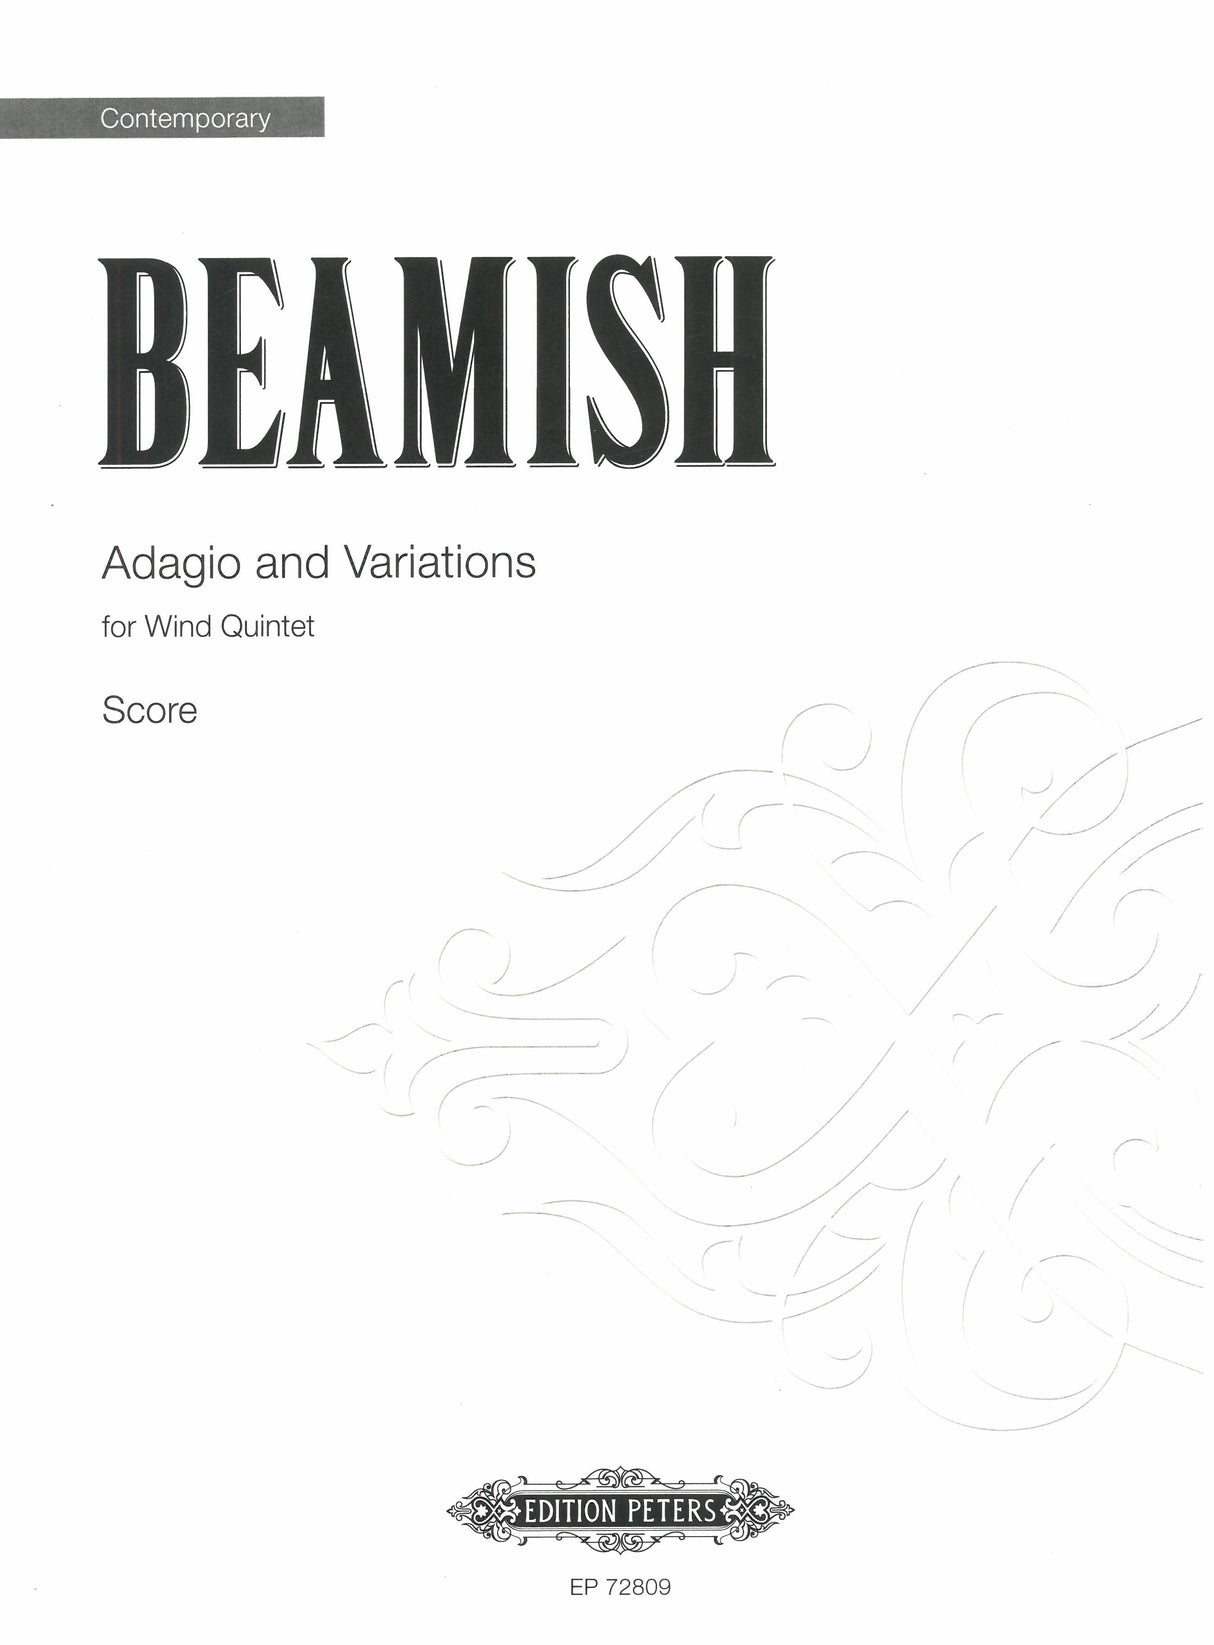 Beamish: Adagio and Variations